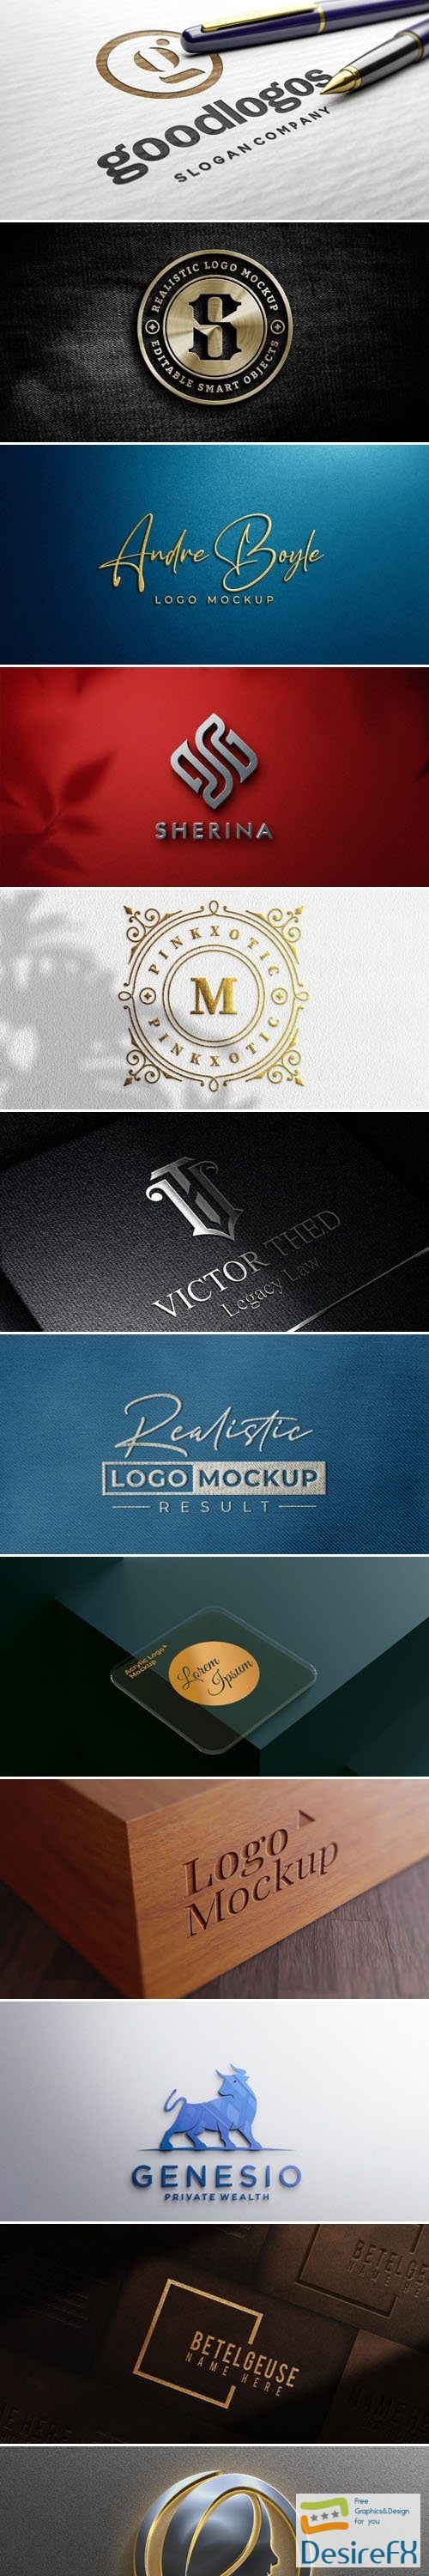 10+ New Luxury Logos PSD Mockups Templates